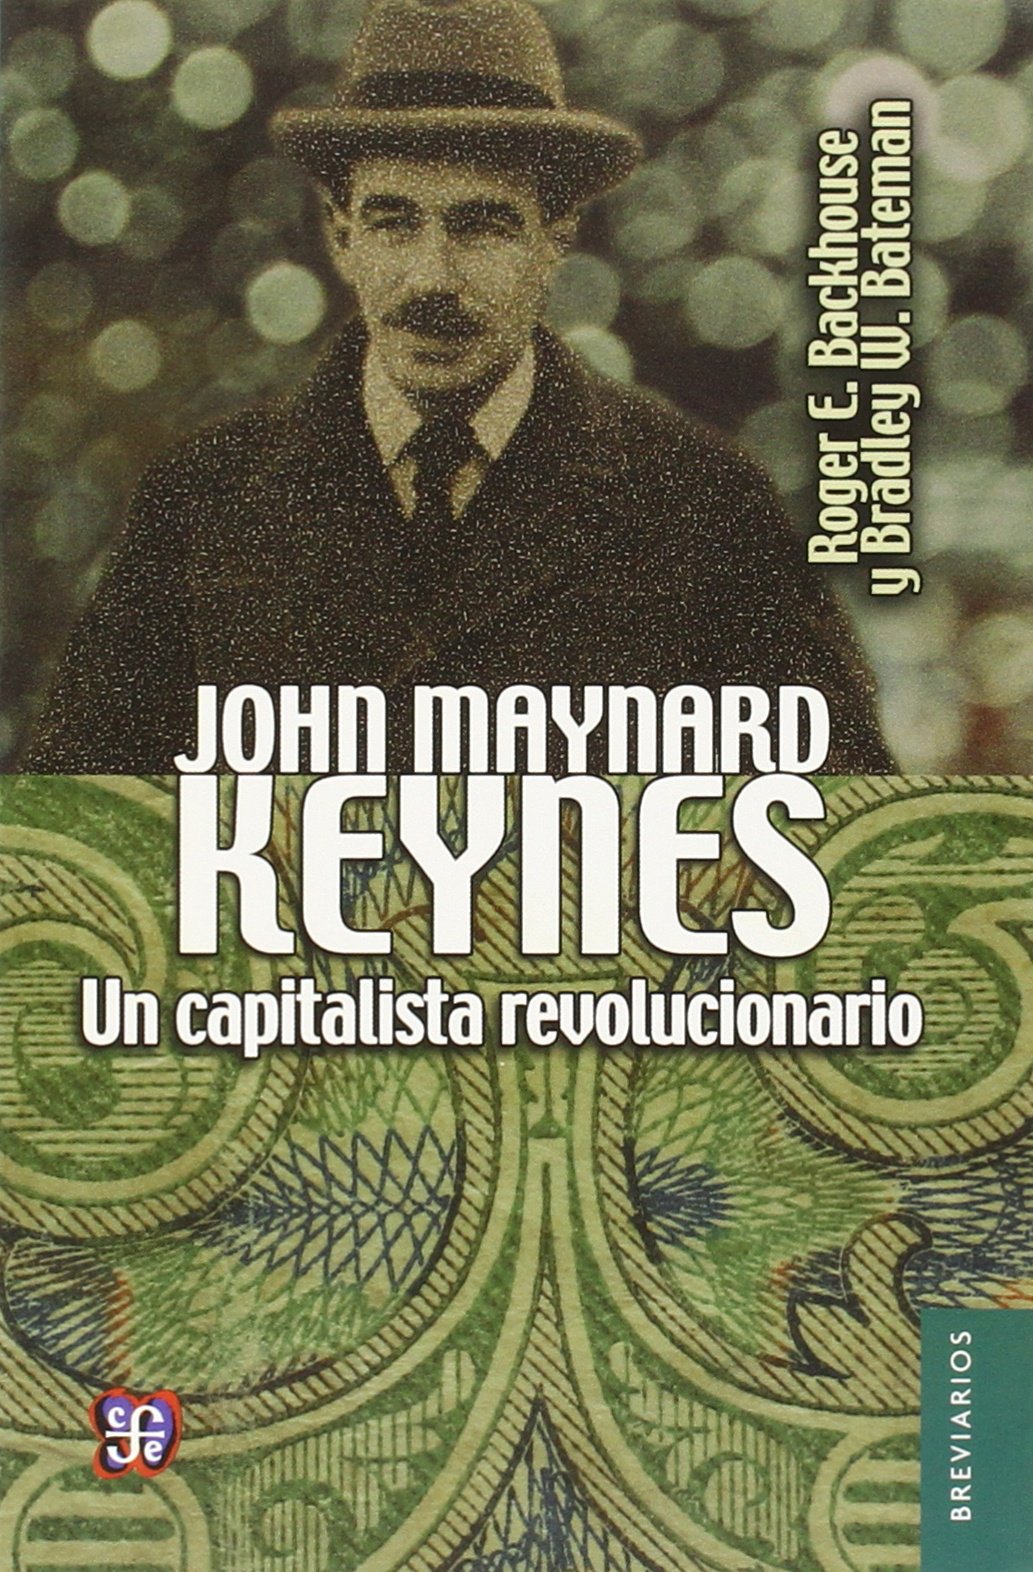 John Maynard Keynes - Roger E. Backhouse y Bradley W. Bateman